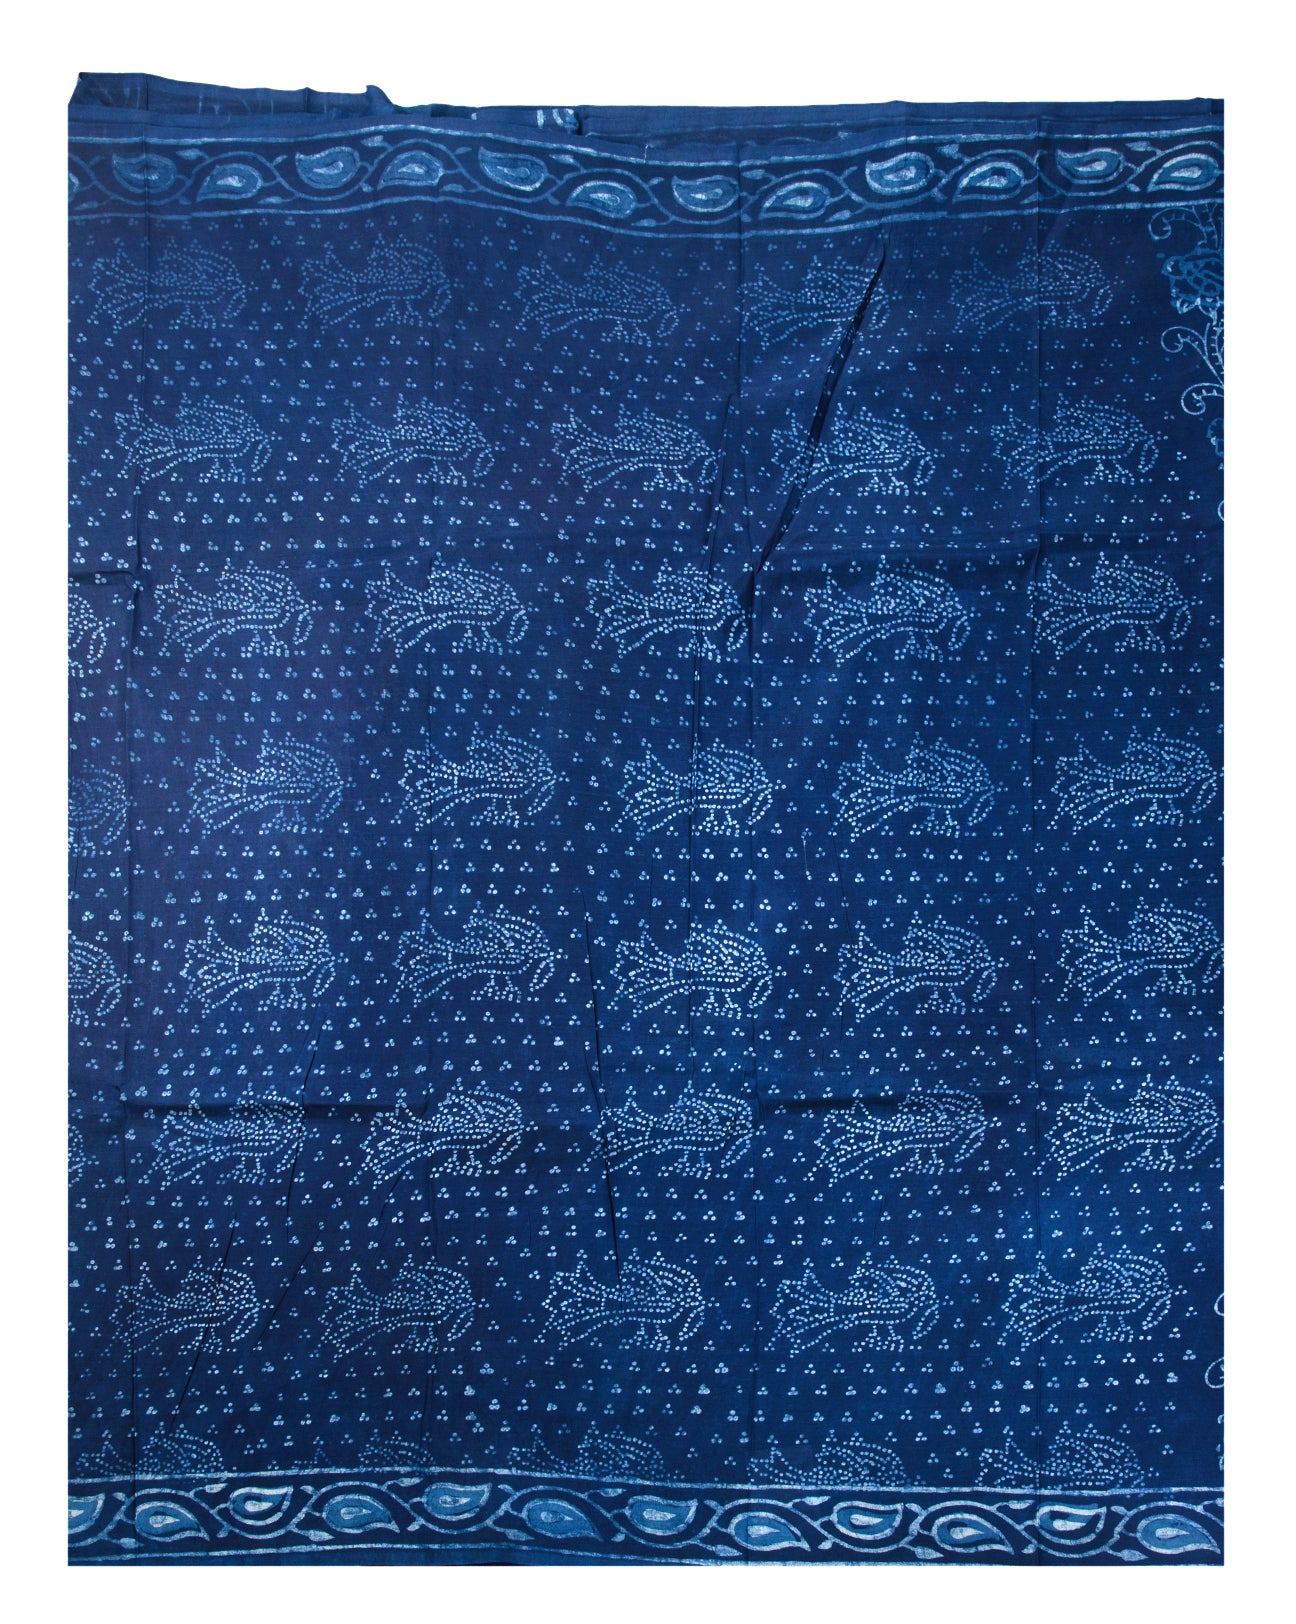 Indigo Blue Soft Cotton Saree - swayamvara silks